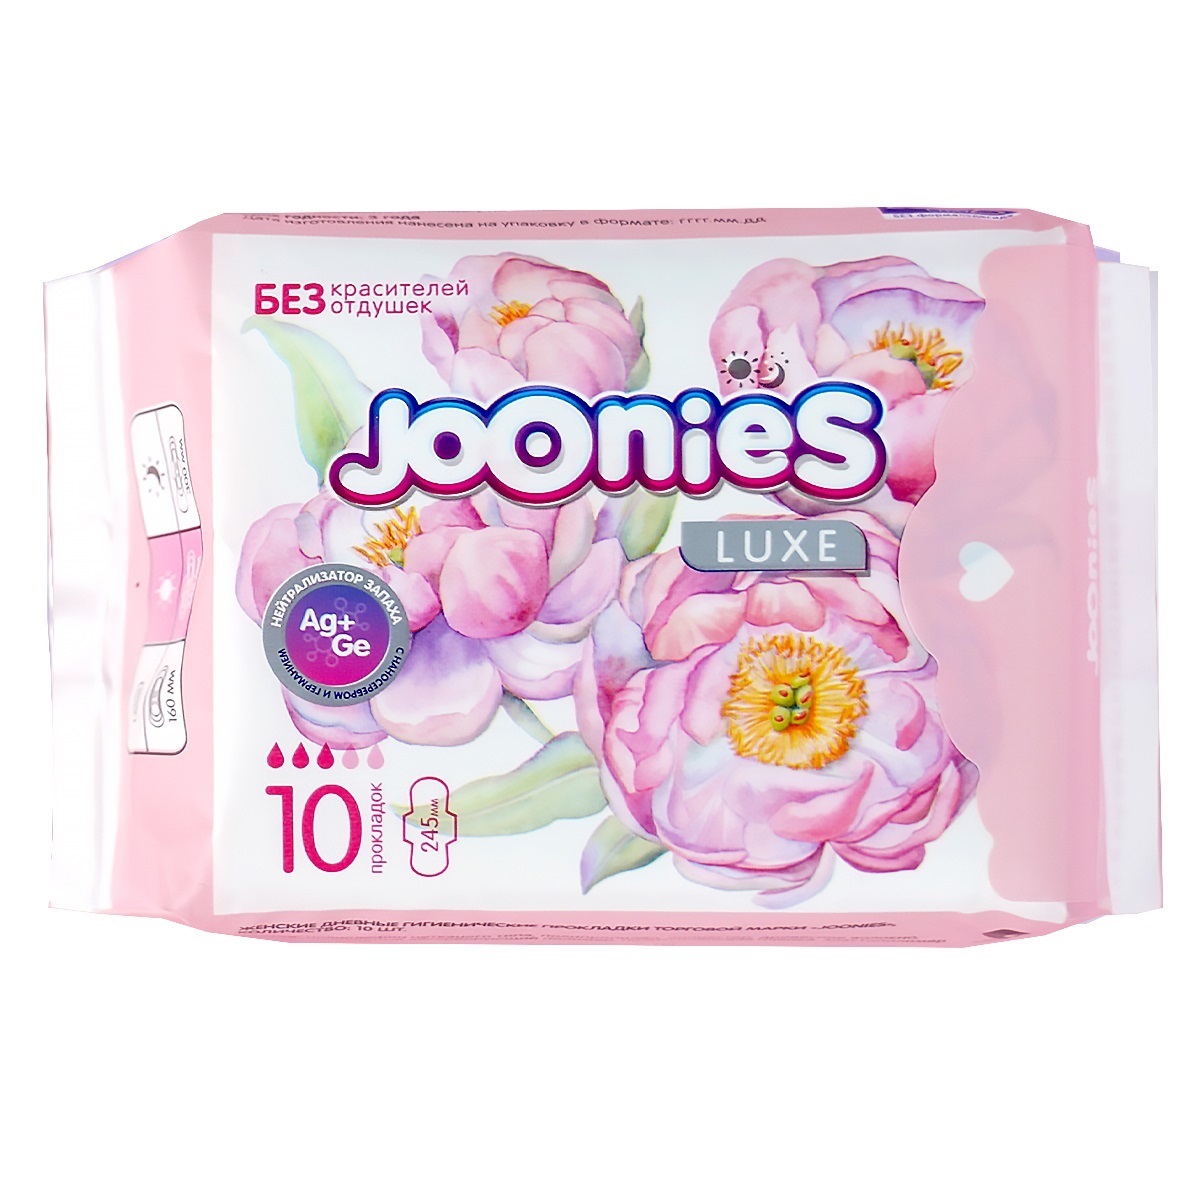 Joonies Дневные прокладки Luxe с нейтрализатором запаха, 10 шт (Joonies, )